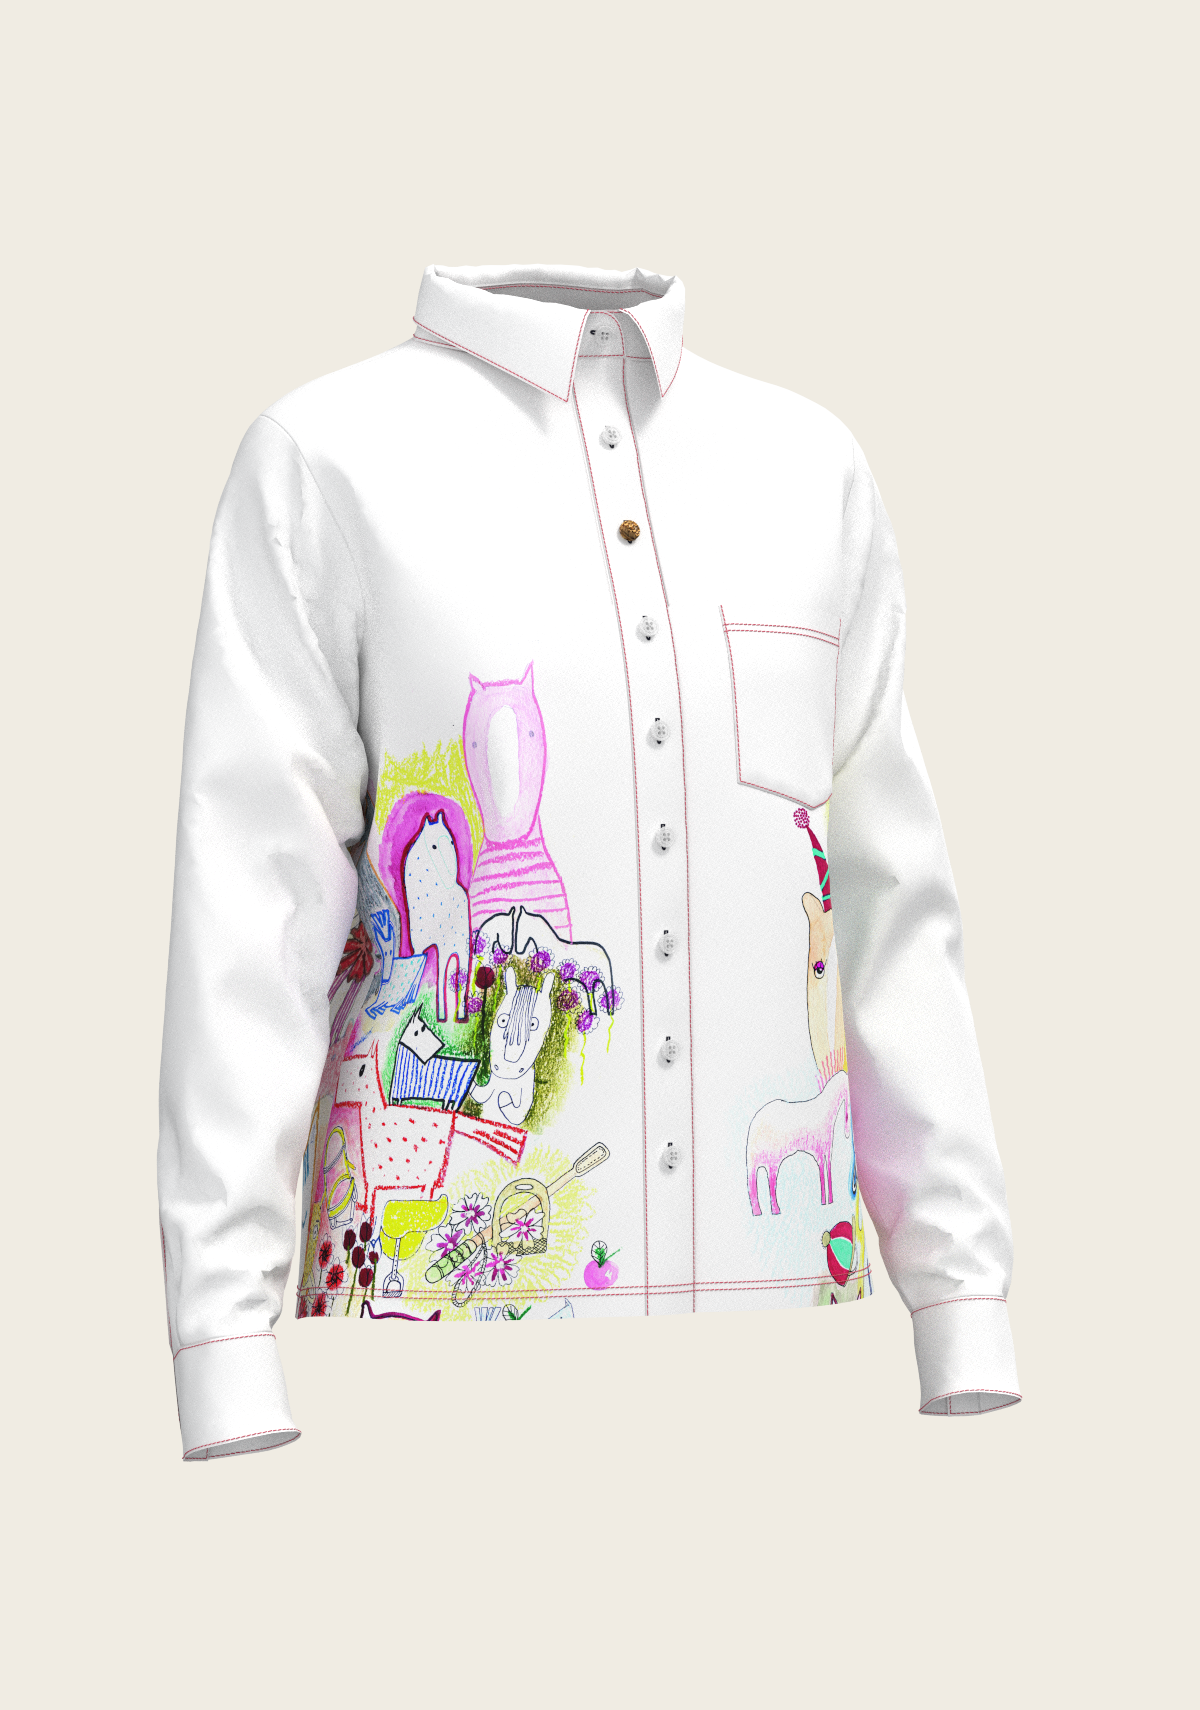 The Horse Fair on White Loose Fitting Button Shirt by Espoir Equestrian